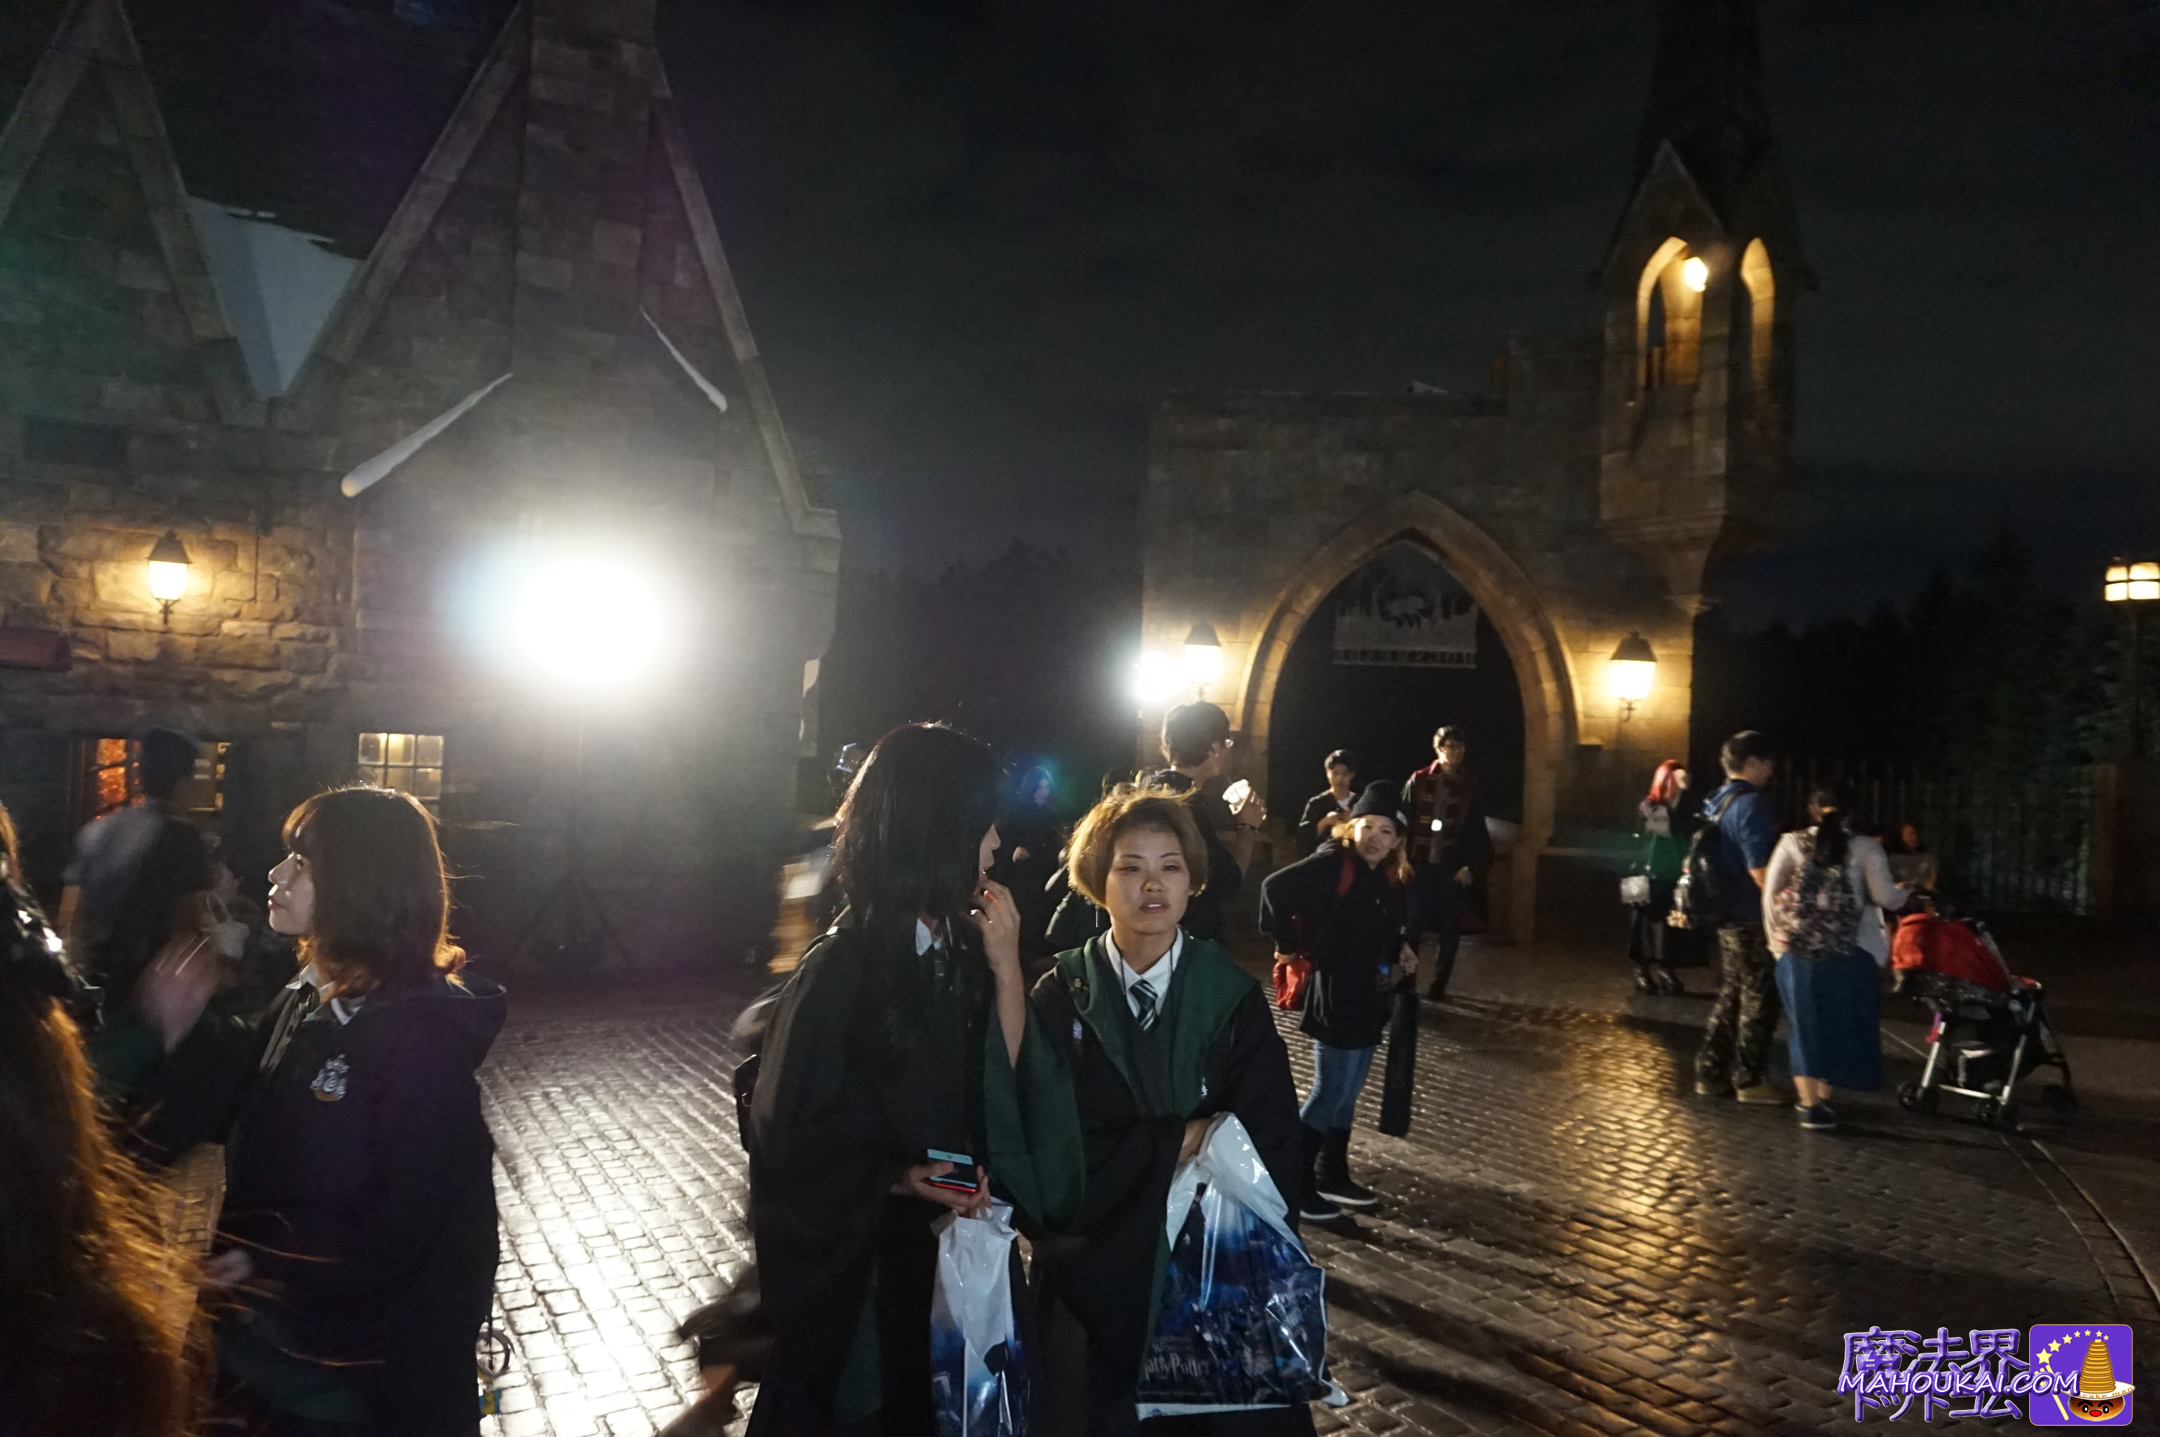 USJ 'Harry Potter Area' Fan Appreciation Night 10 October 2019.